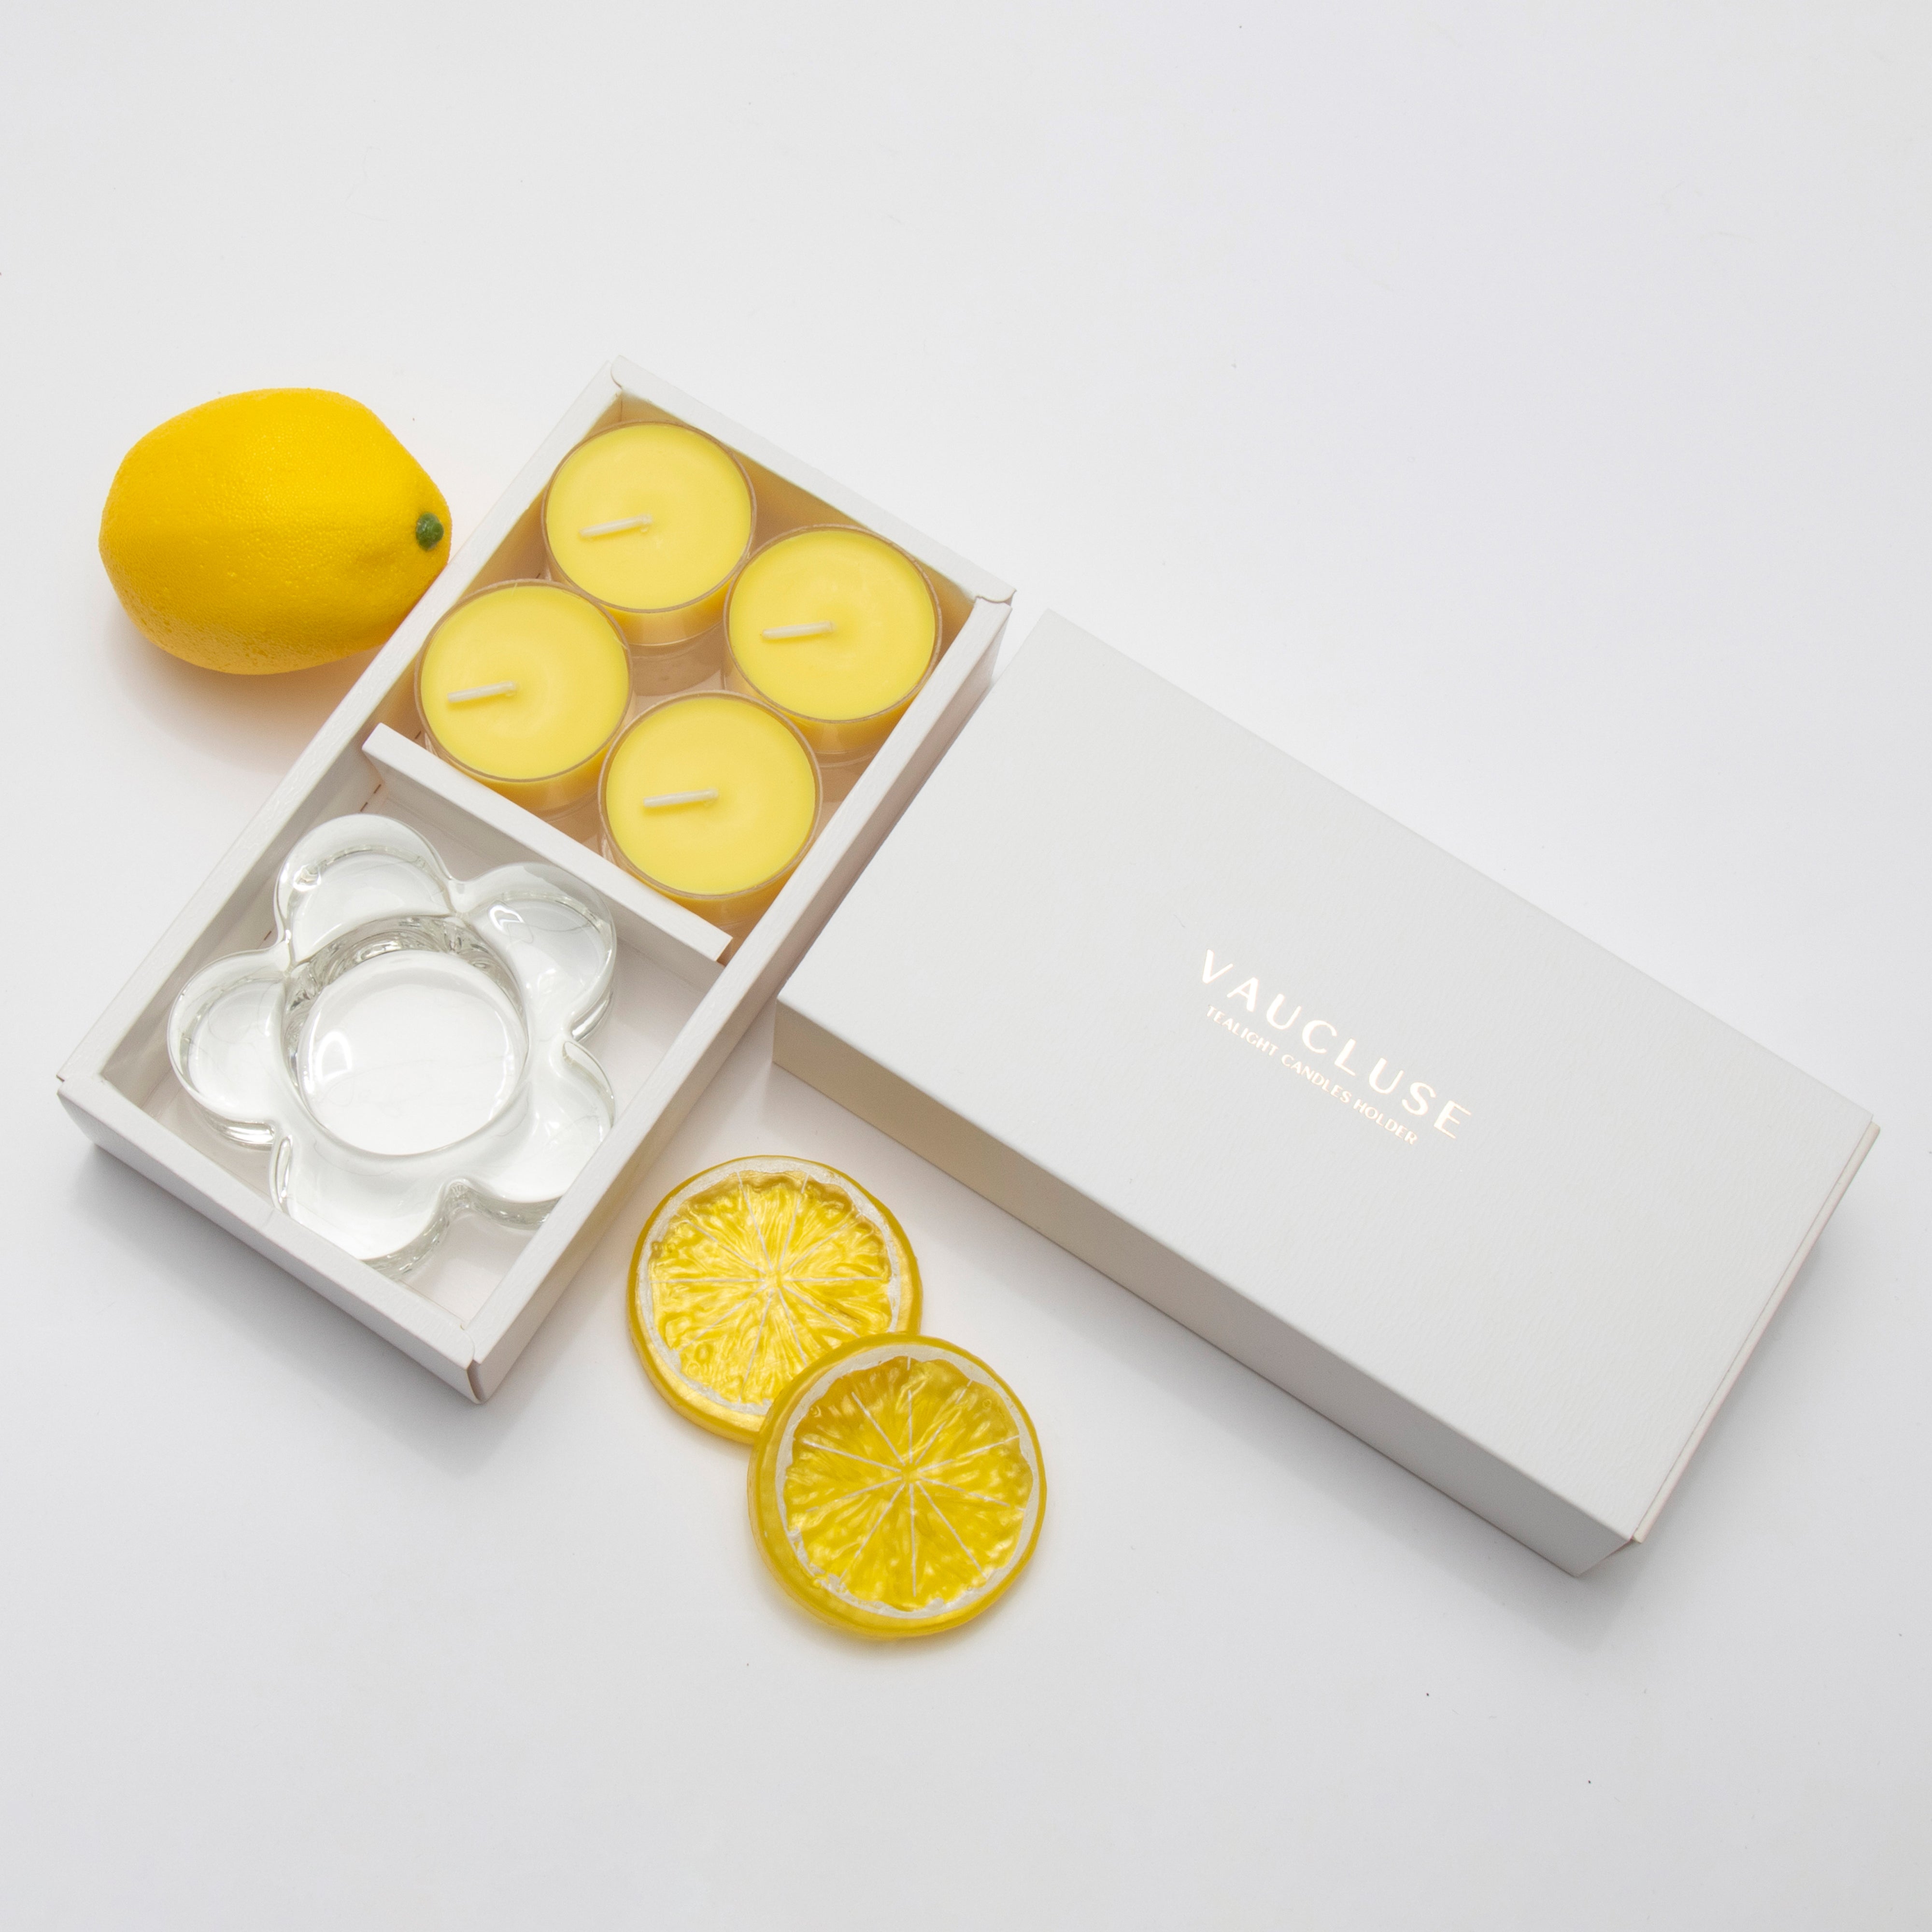 Lemon Tealights and Candle Holder Set (Flower shape) - VAUCLUSE